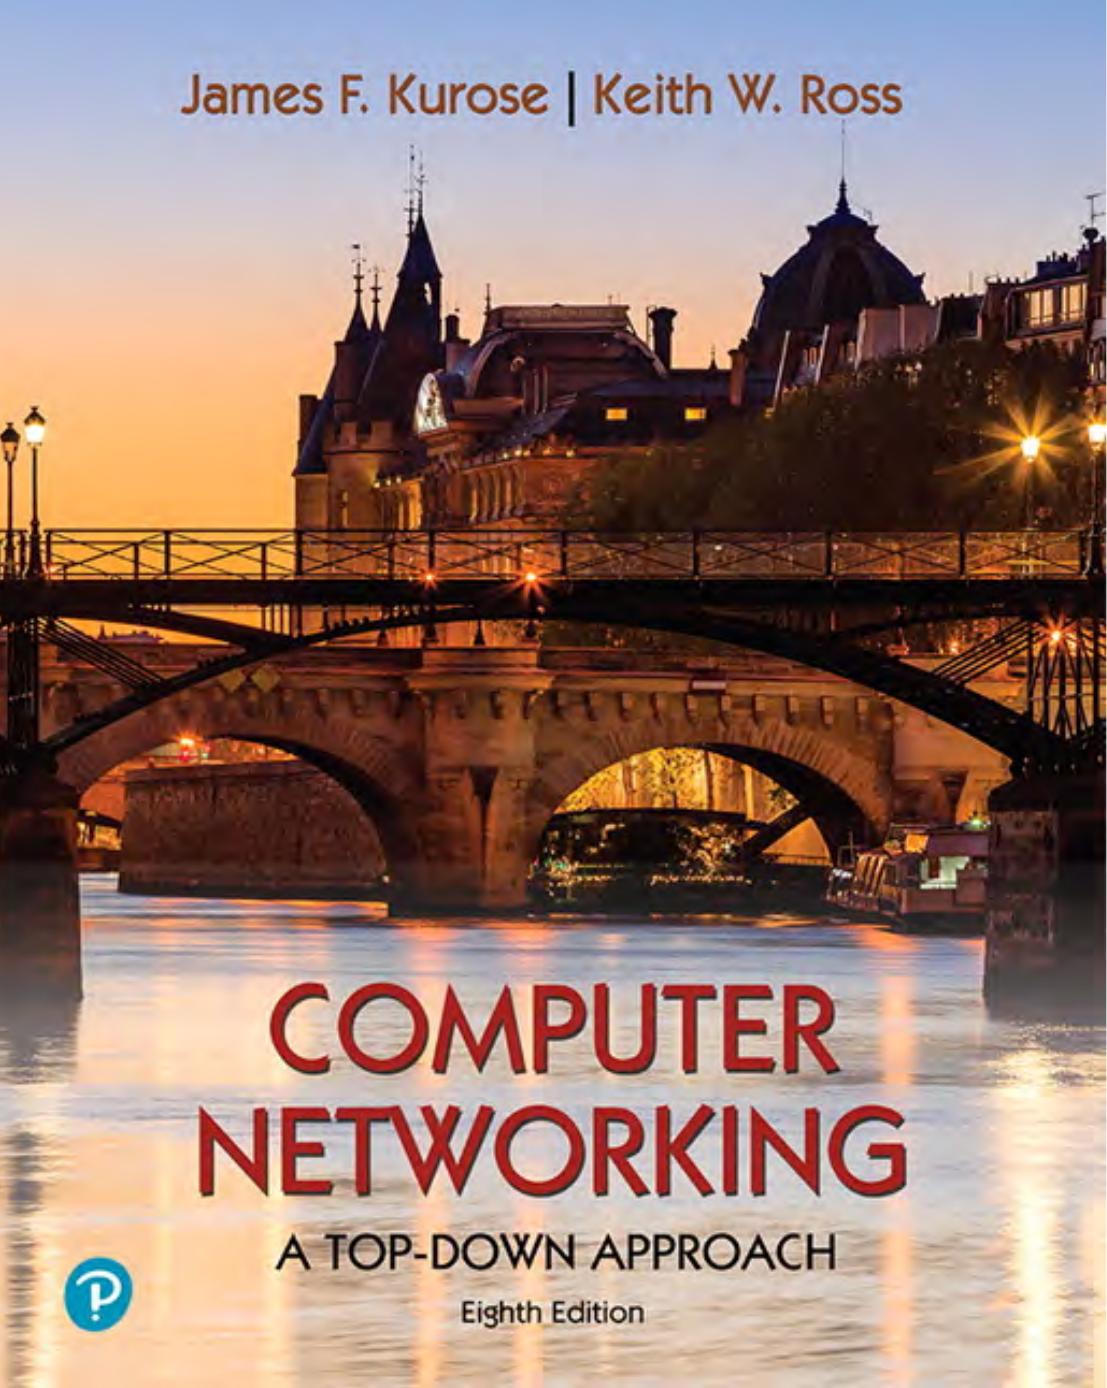 Conputer Networking: A Top-Down Approach